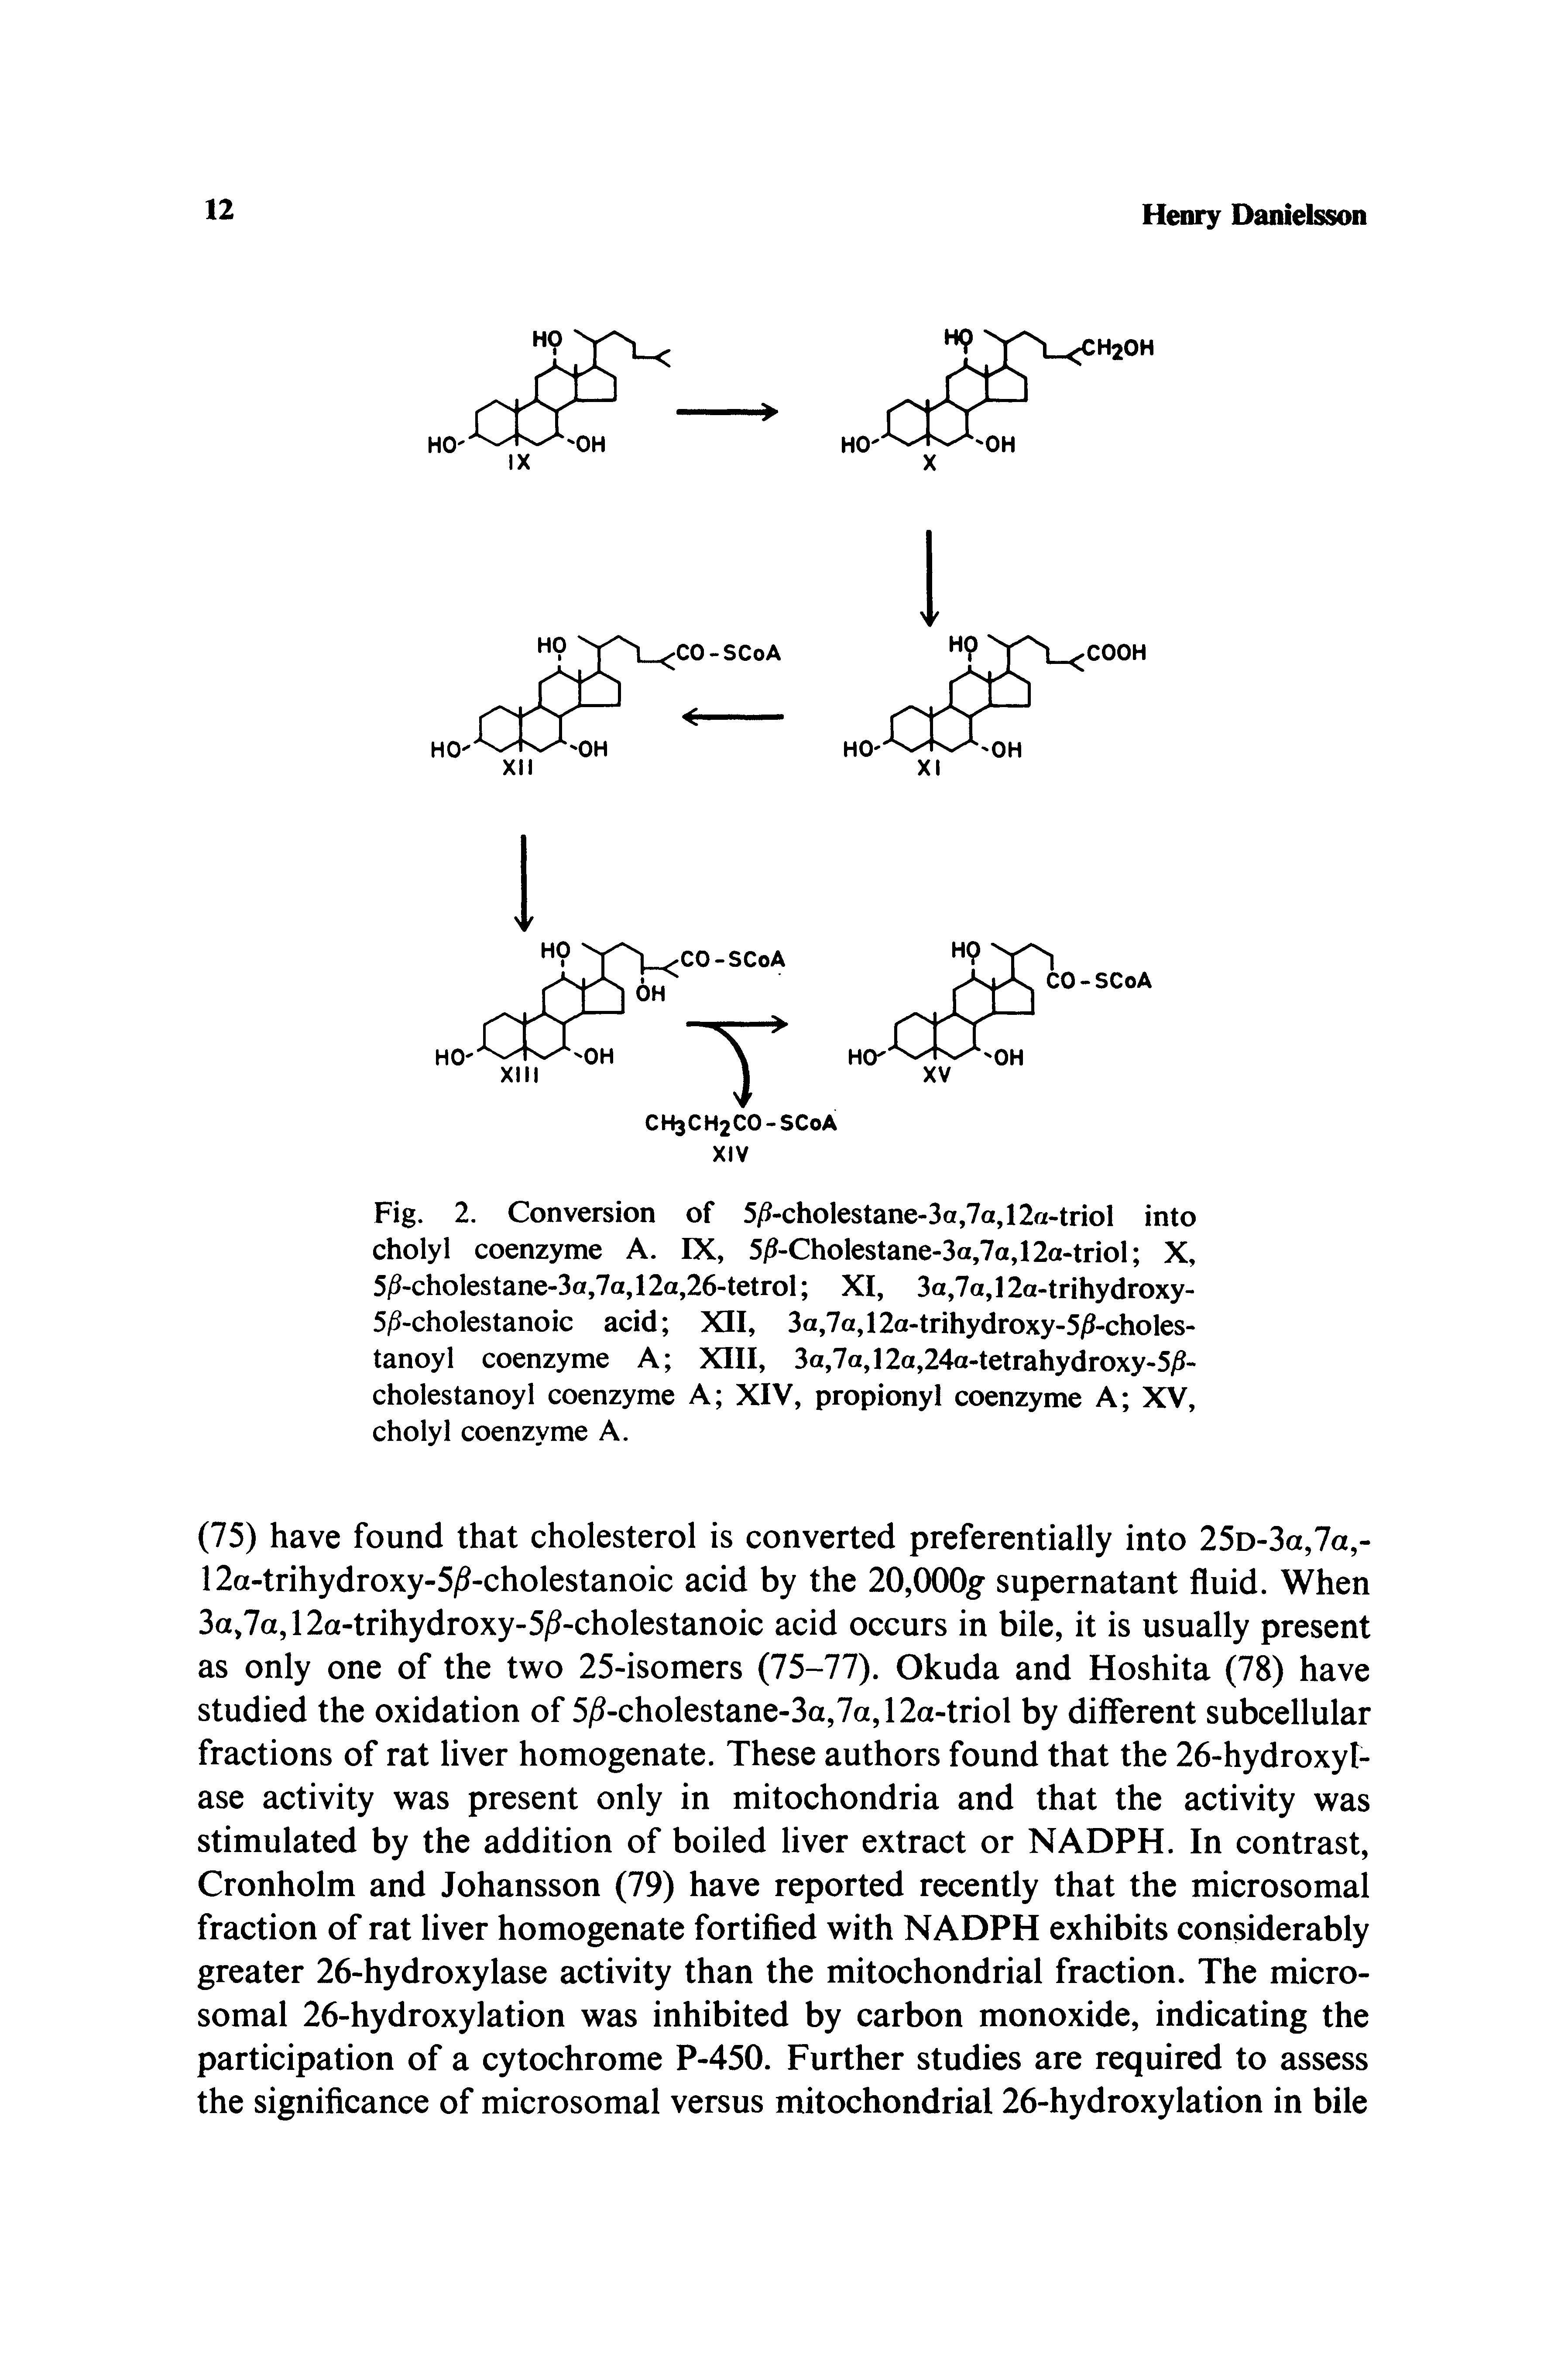 Fig. 2. Conversion of 5/ -cholestane-3a,7a,12a-triol into cholyl coenzyme A. IX, 5)5-Cholestane-3a,7a,12a-triol X, 5 -cholestane-3a,7a,12a,26-tetrol XI, 3a,7a,12a-trihydroxy-5/5-cholestanoic acid XII, 3a,7a,12a-trihydroxy-5i3-choles-tanoyl coenzyme A XIII, 3a,7a,12a,24a-tetrahydroxy-5/5-cholestanoyl coenzyme A XIV, propionyl coenzyme A XV, cholyl coenzyme A.